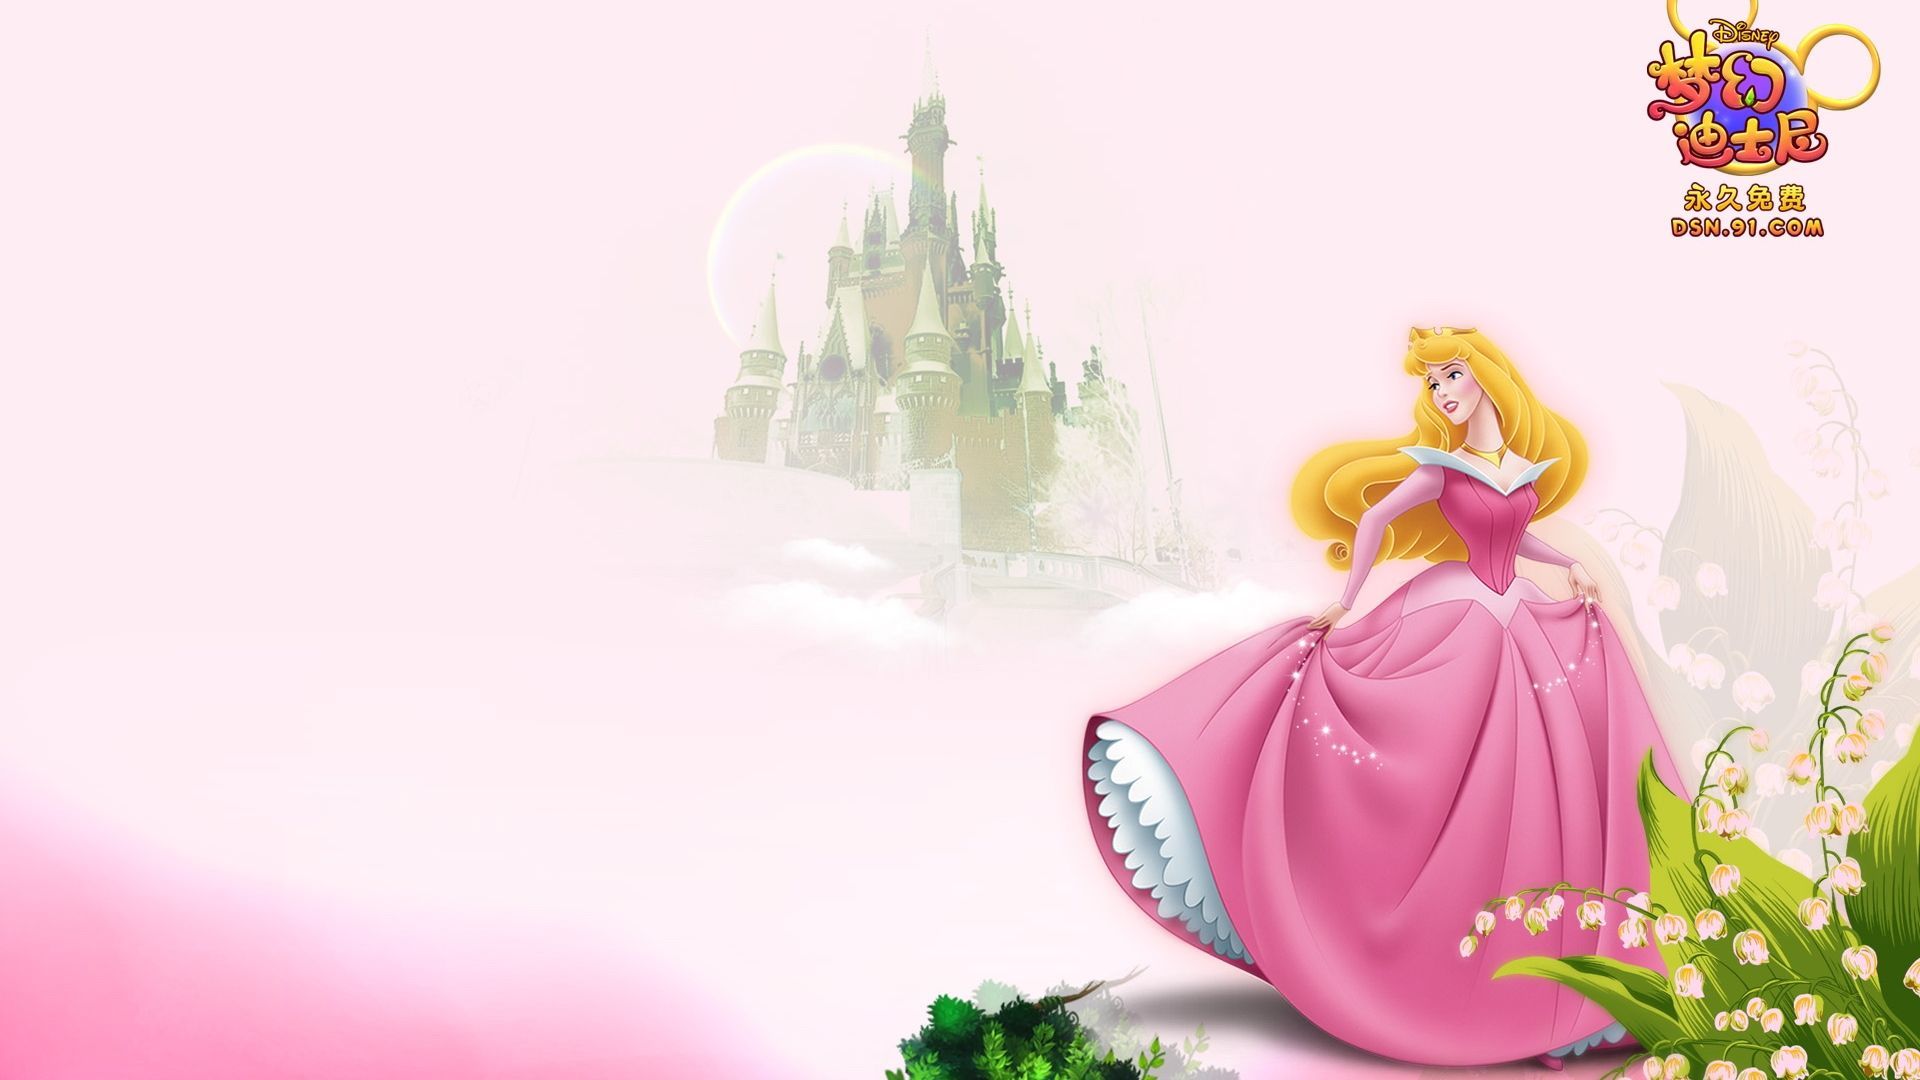 Free download Disney Princesses Sleeping Beauty wallpaper HD